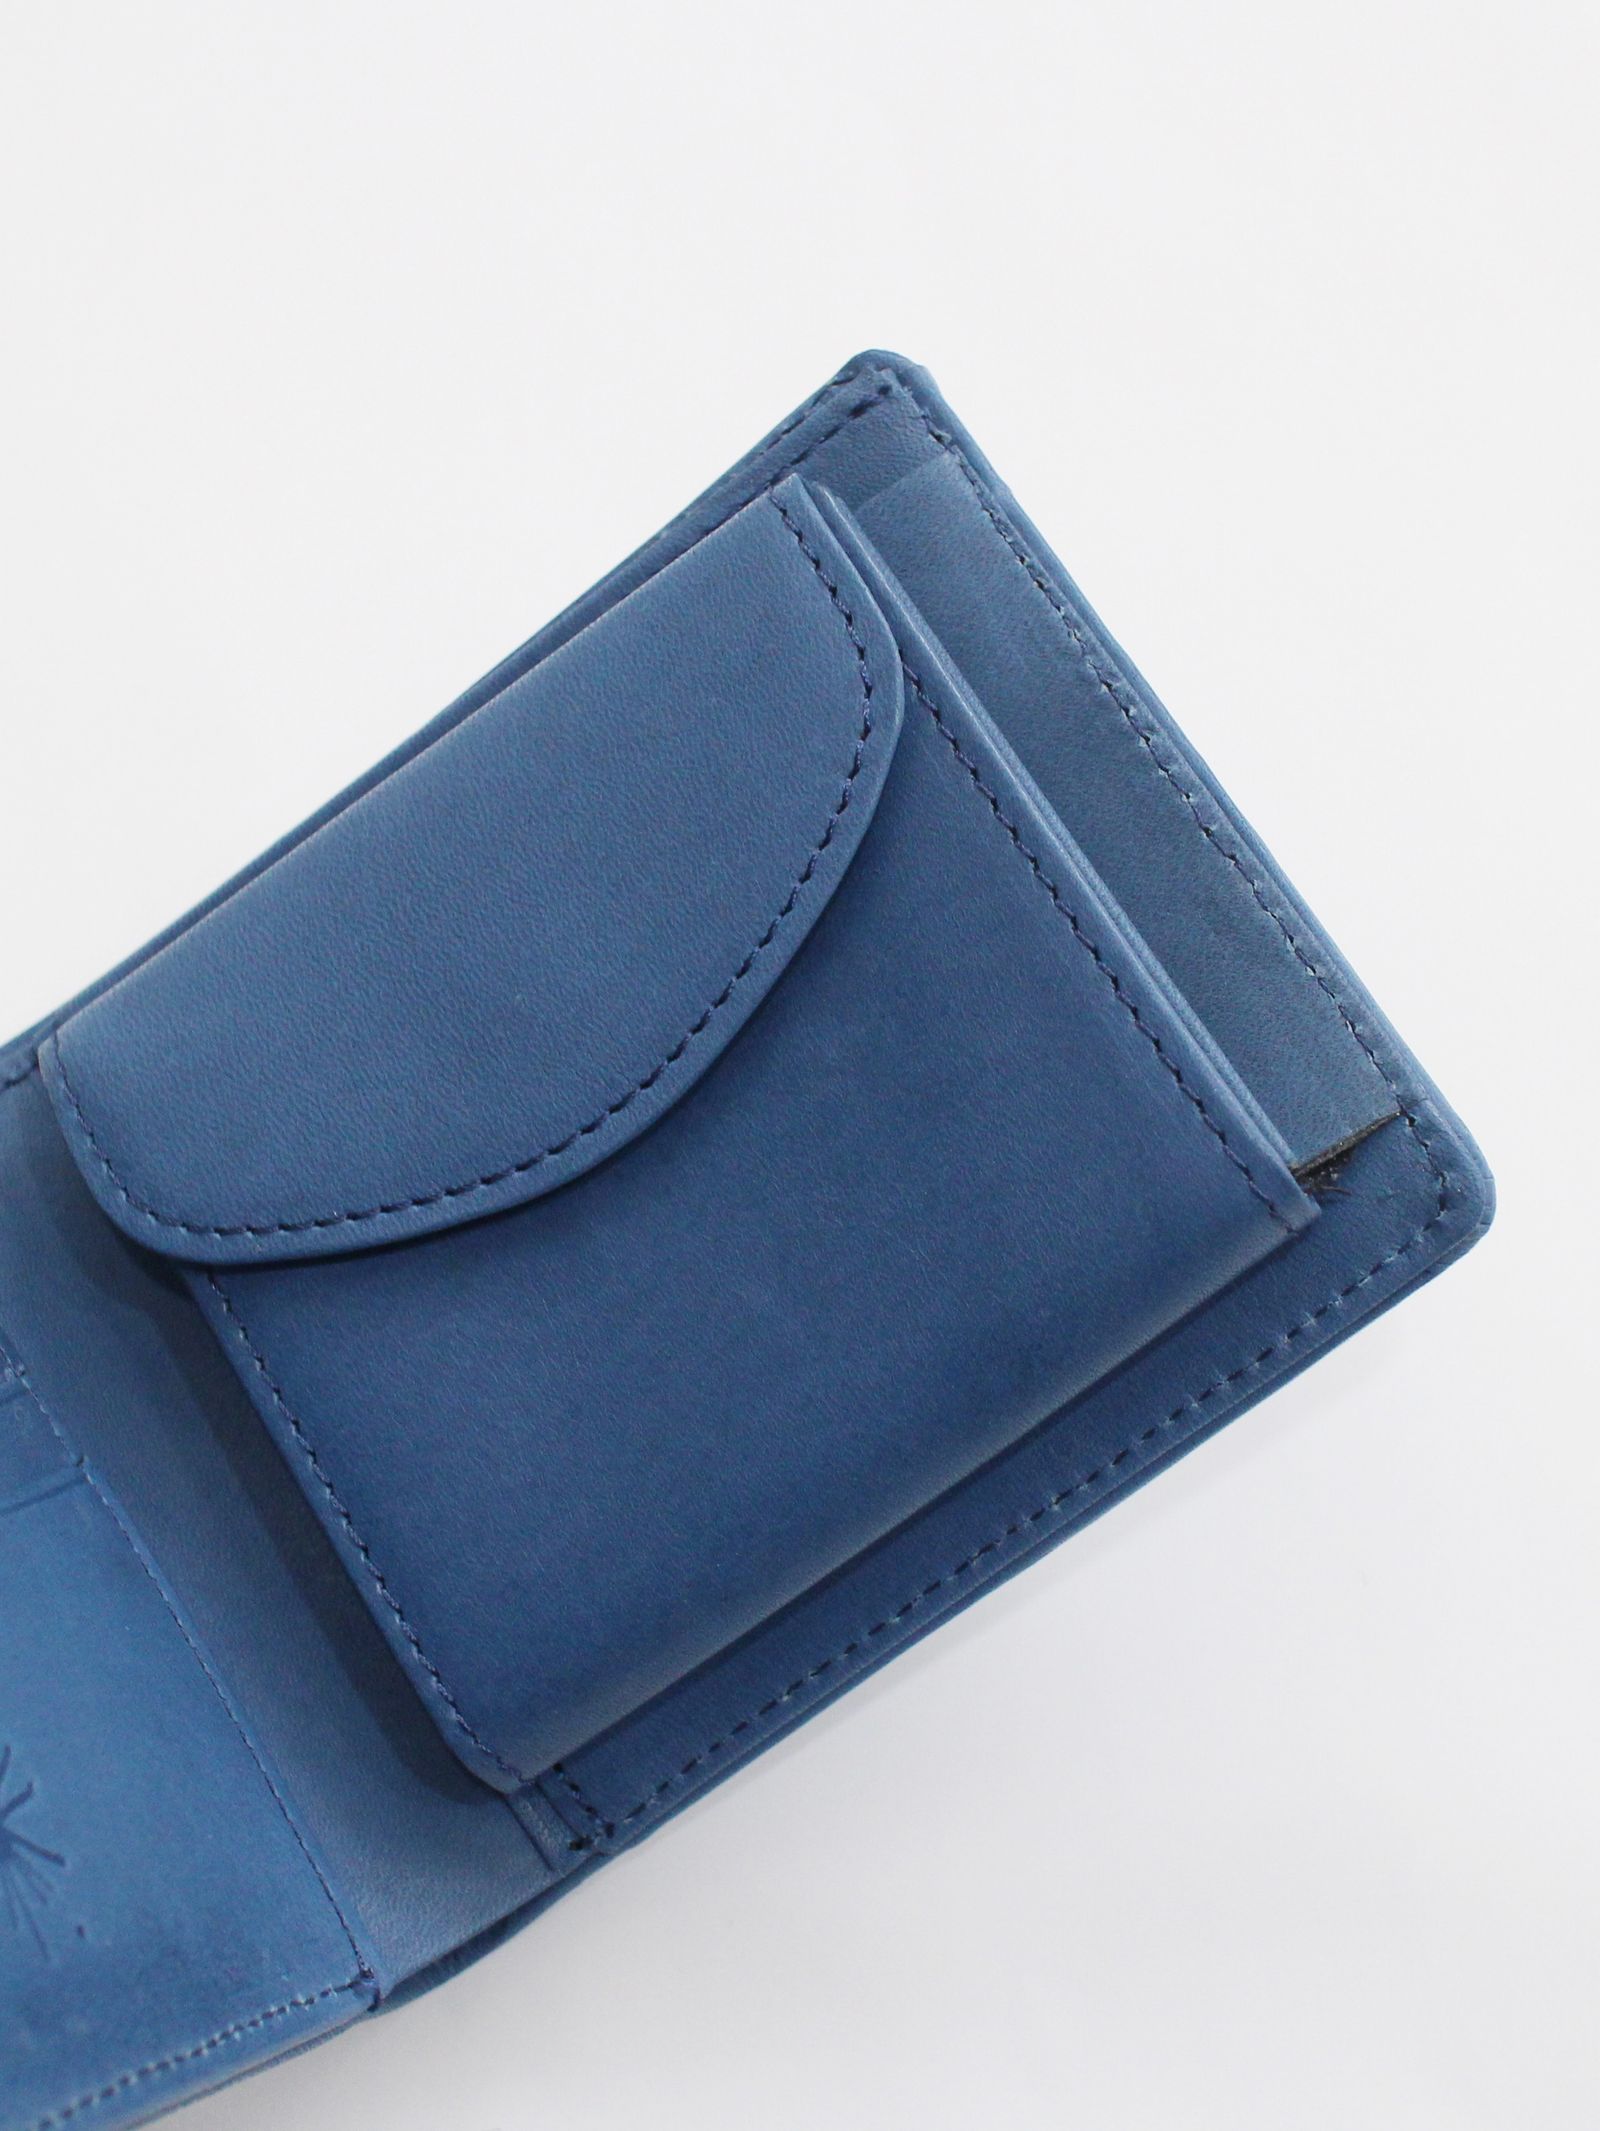 Maison MIHARA YASUHIRO - 炙り出し二つ折り 財布 - ウオレット - BLUE 